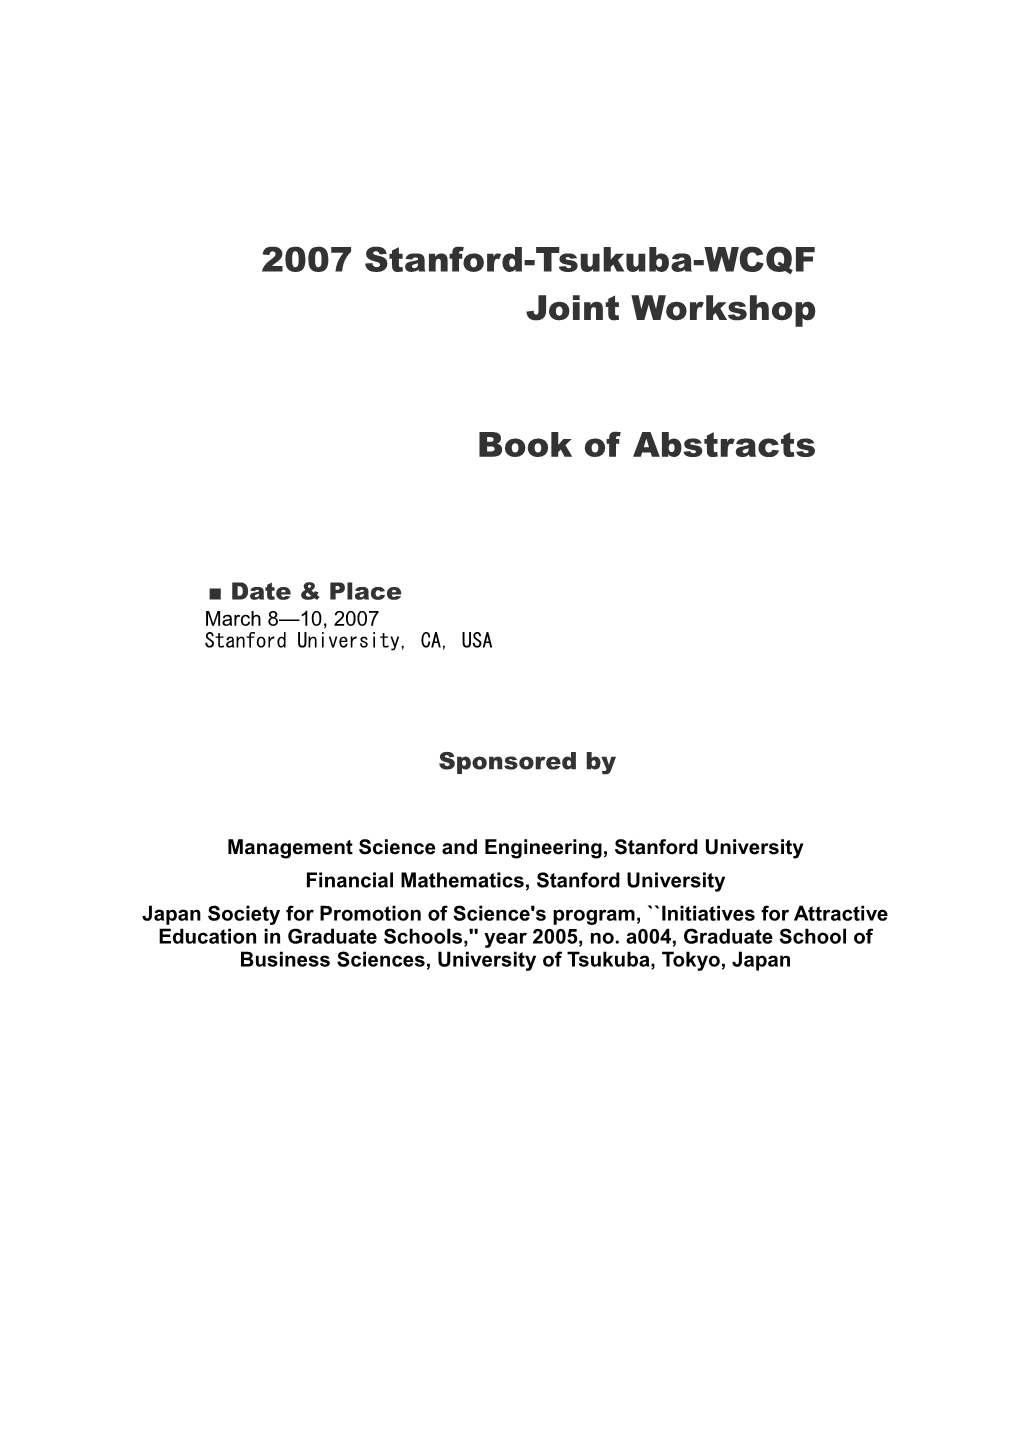 2007 Stanford-Tsukuba-WCQF Joint Workshop